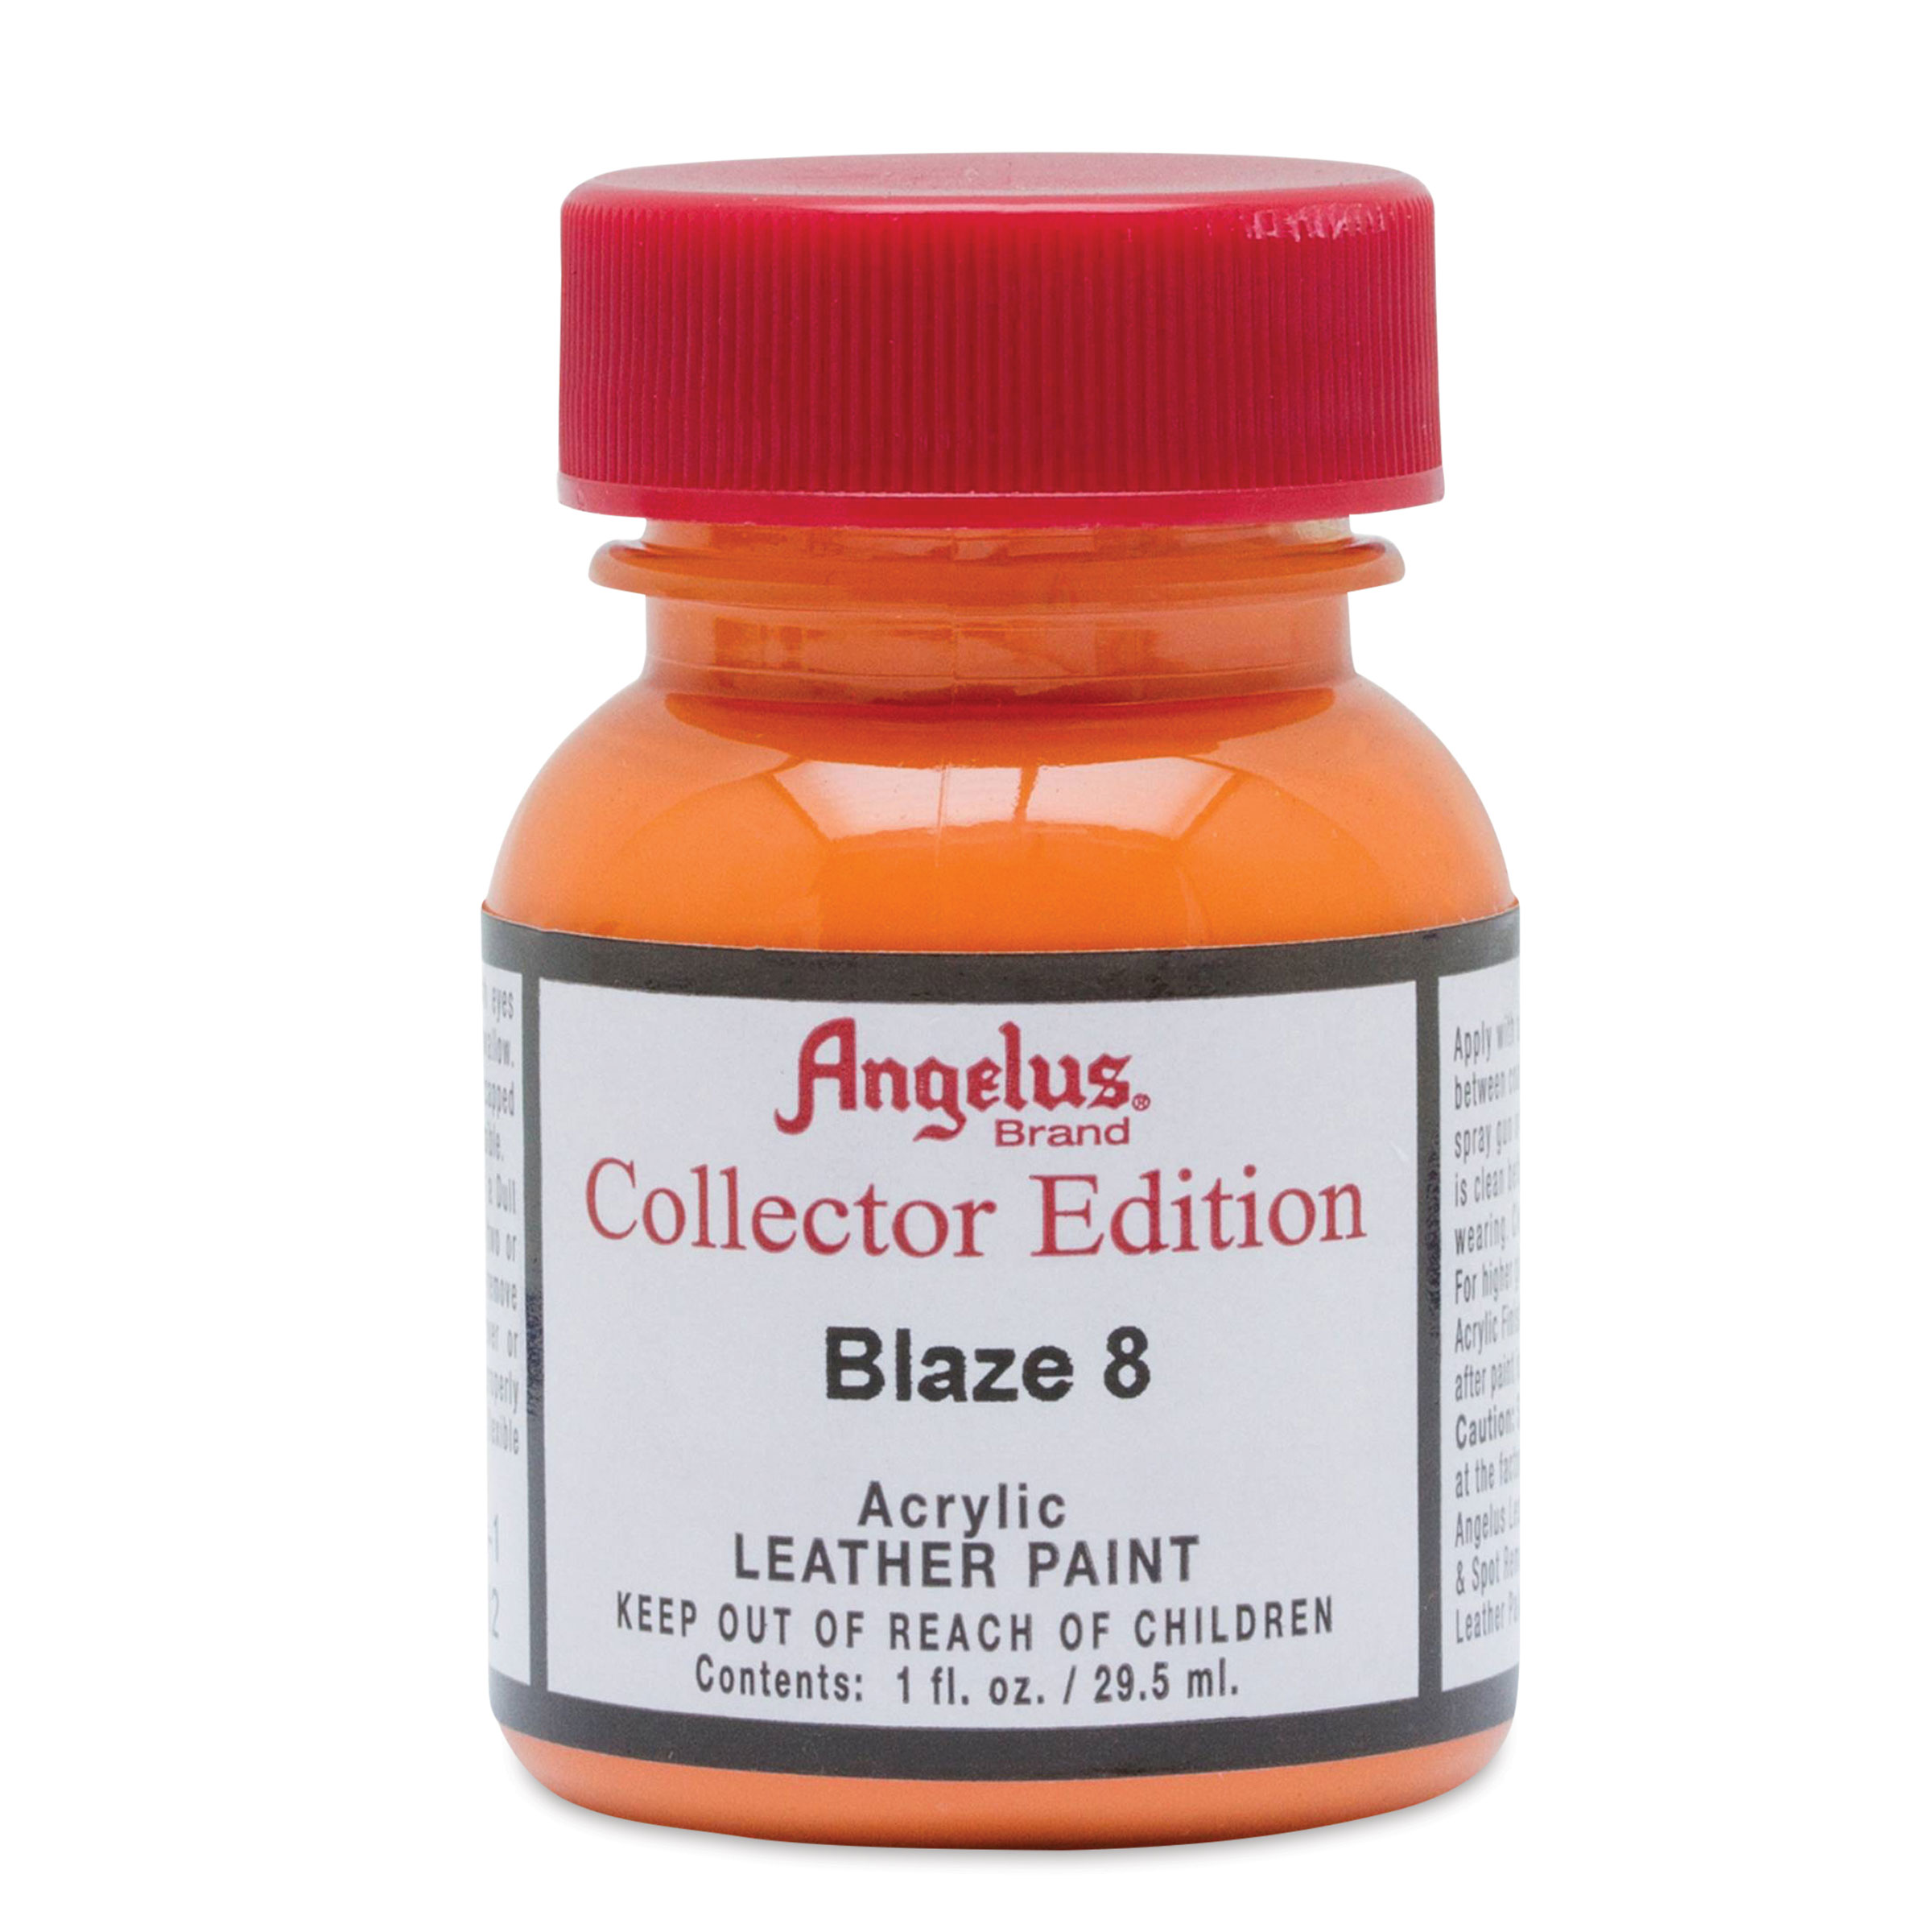 Angelus Collector Edition Acrylic Leather Paint - Blaze 8